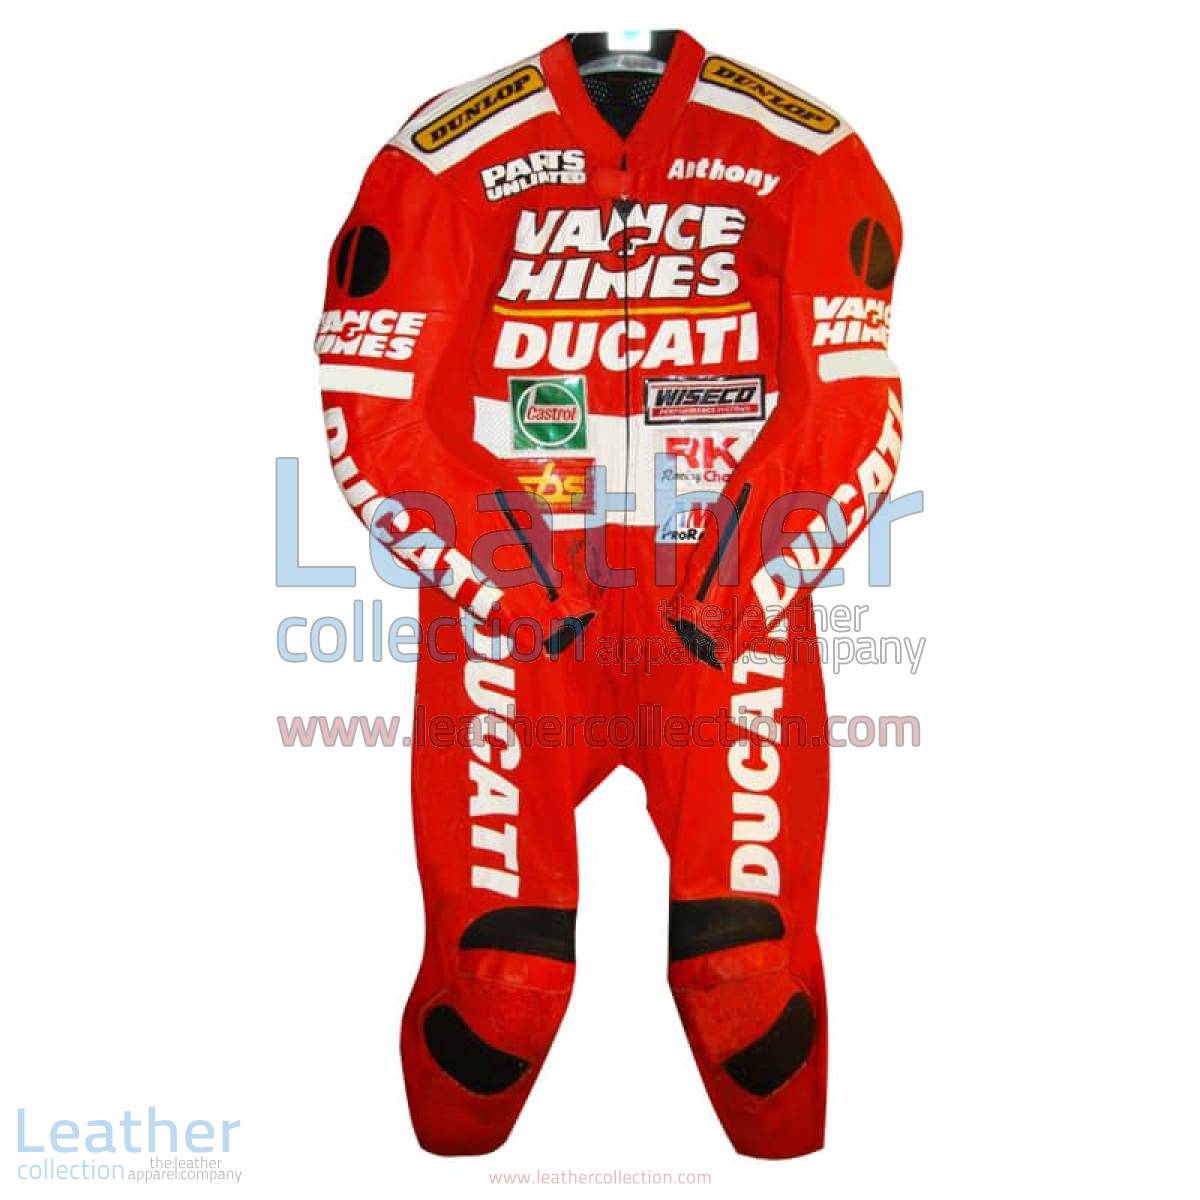 Anthony Gobert Vance & Hines Ducati Leathers 1998 - 1999 AMA